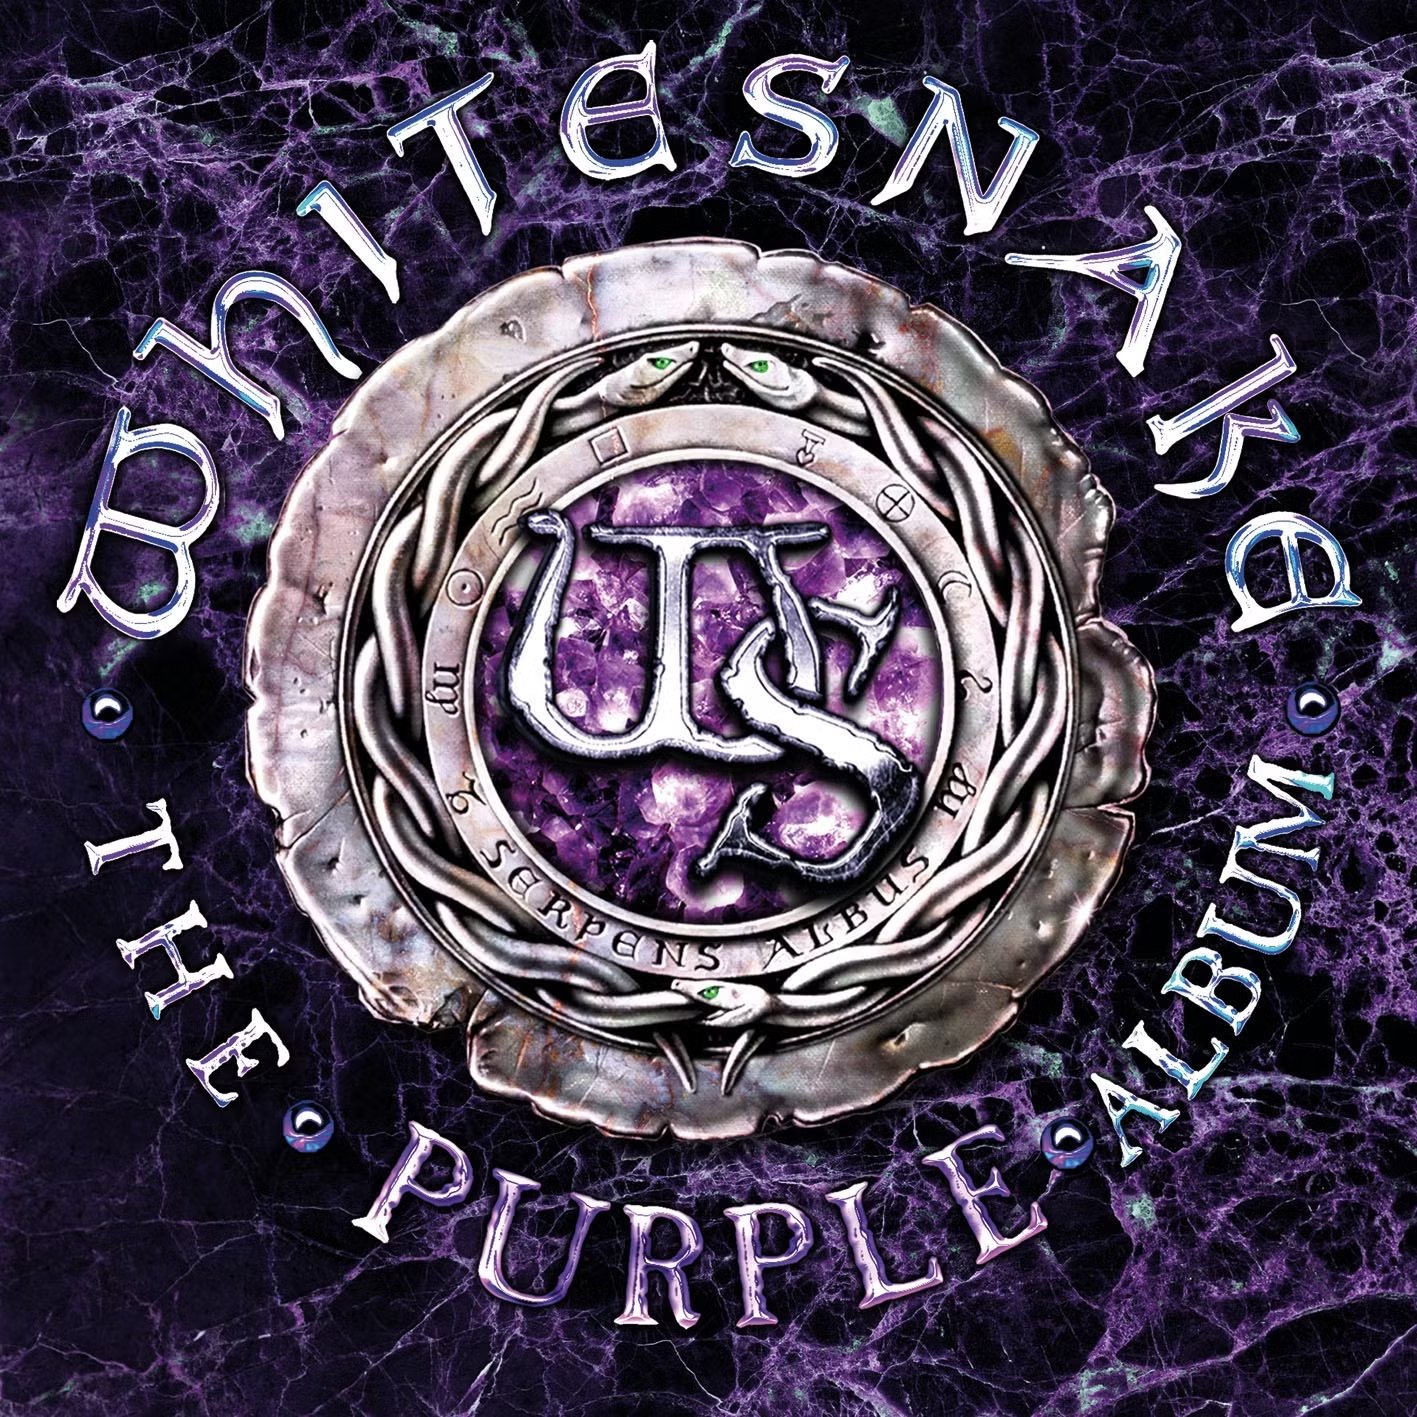 Whitesnake: The Purple Album (CD) цена и фото